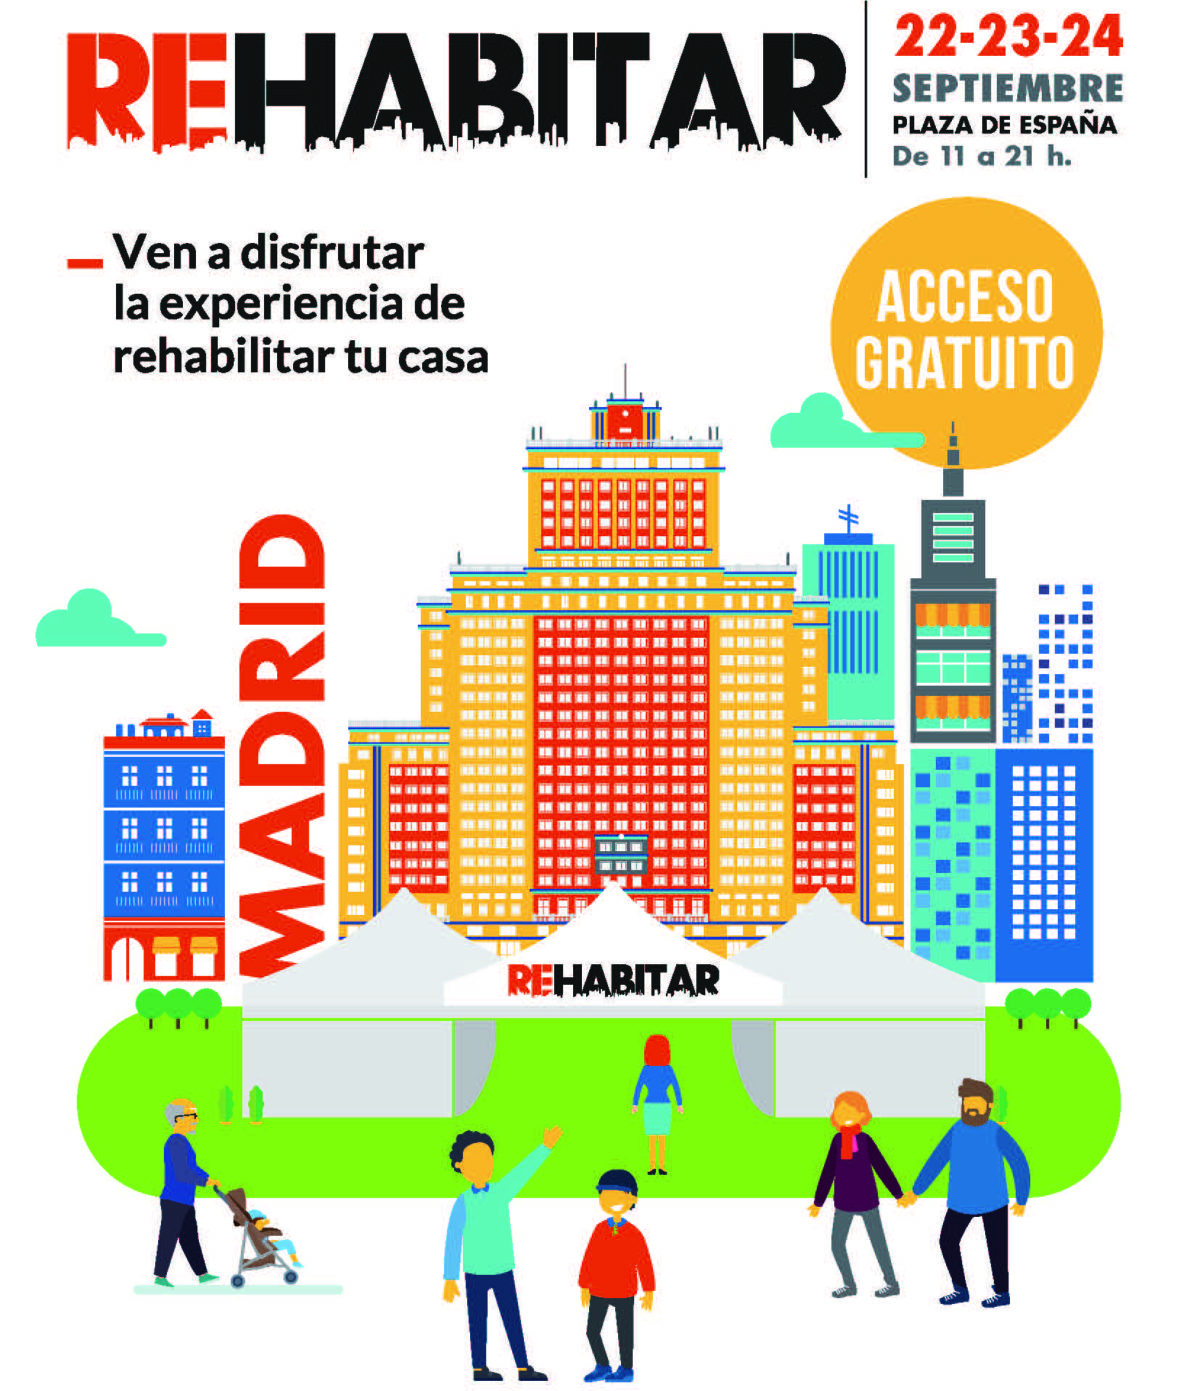 El sistema Sate Rhonatherm en Feria Rehabitar Madrid